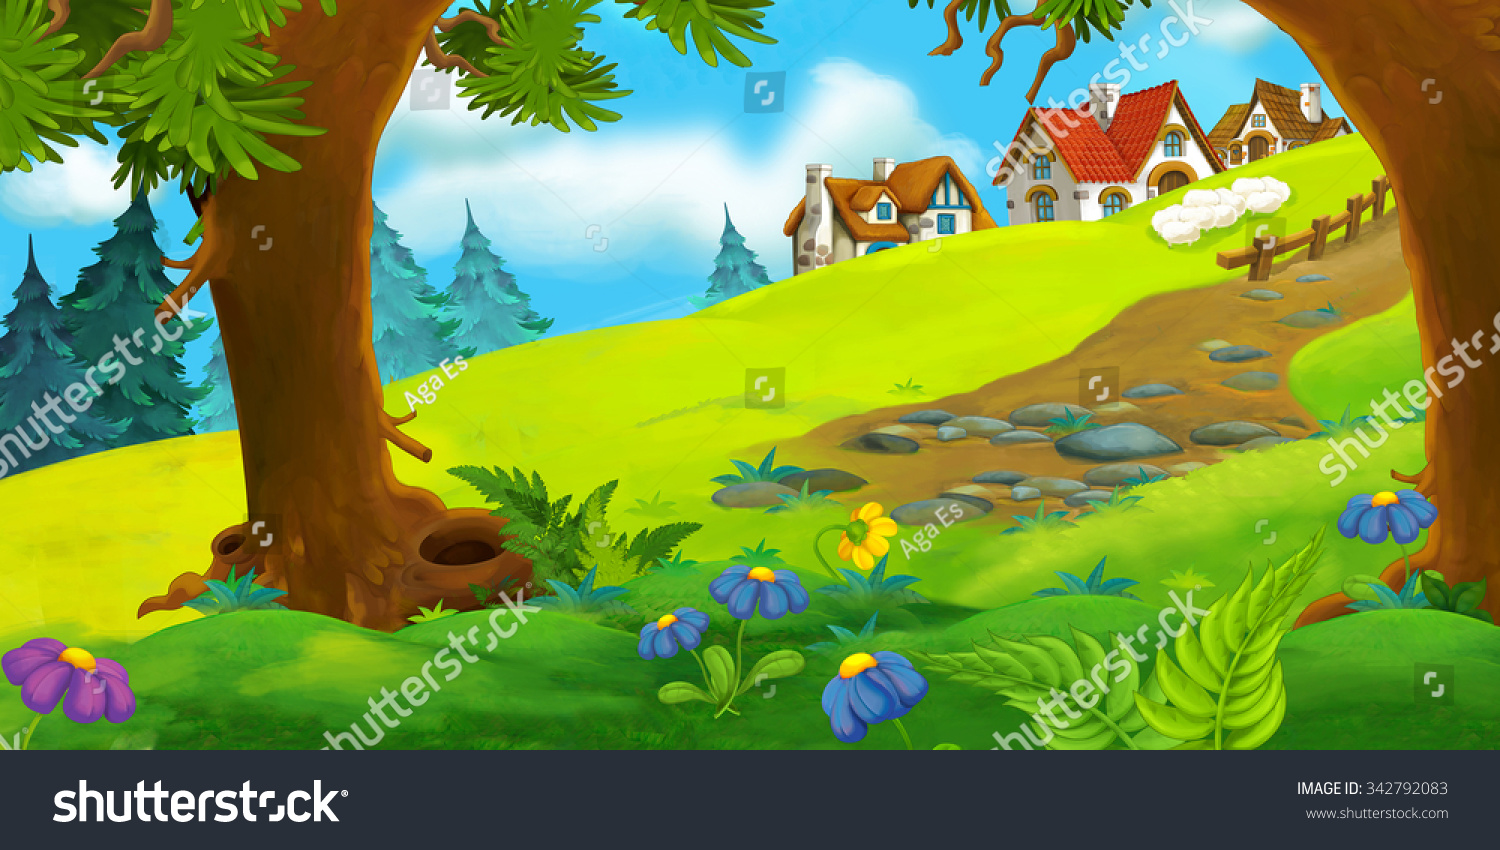 Cartoon Background Of Old Village - Illustration For The Children